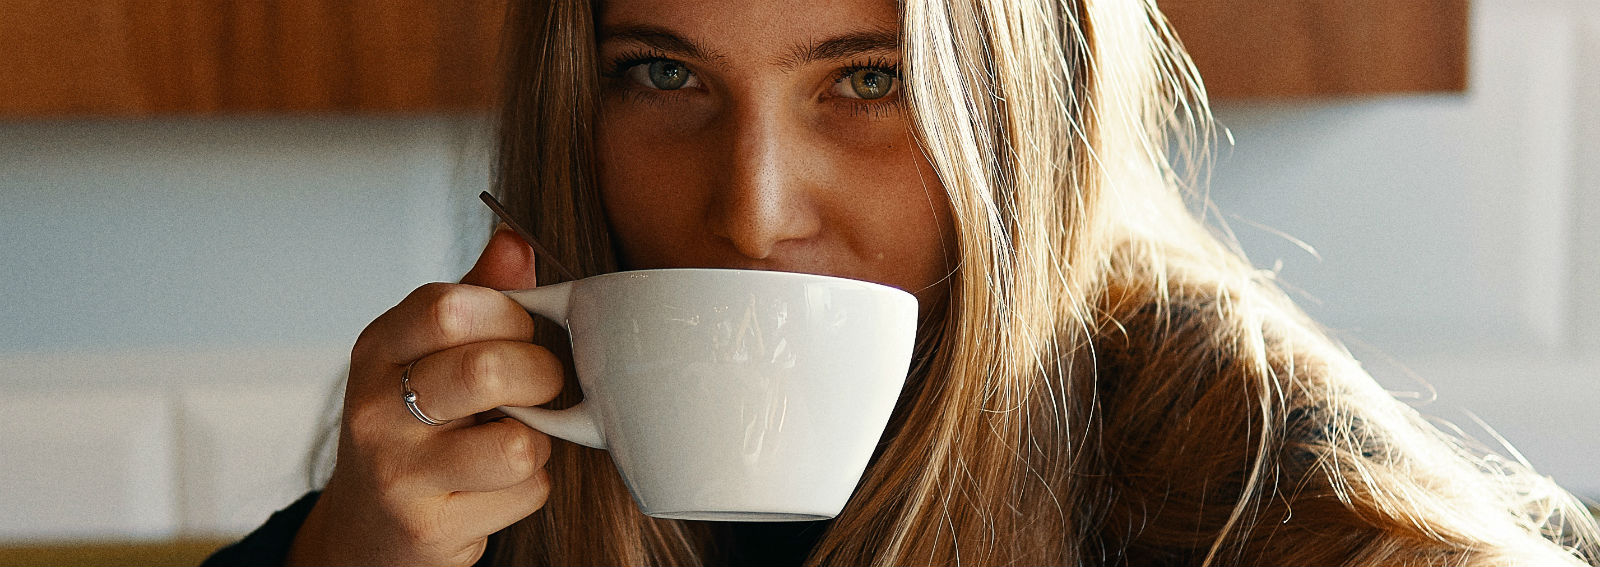 woman-tea-drinking-coffee-mug-white